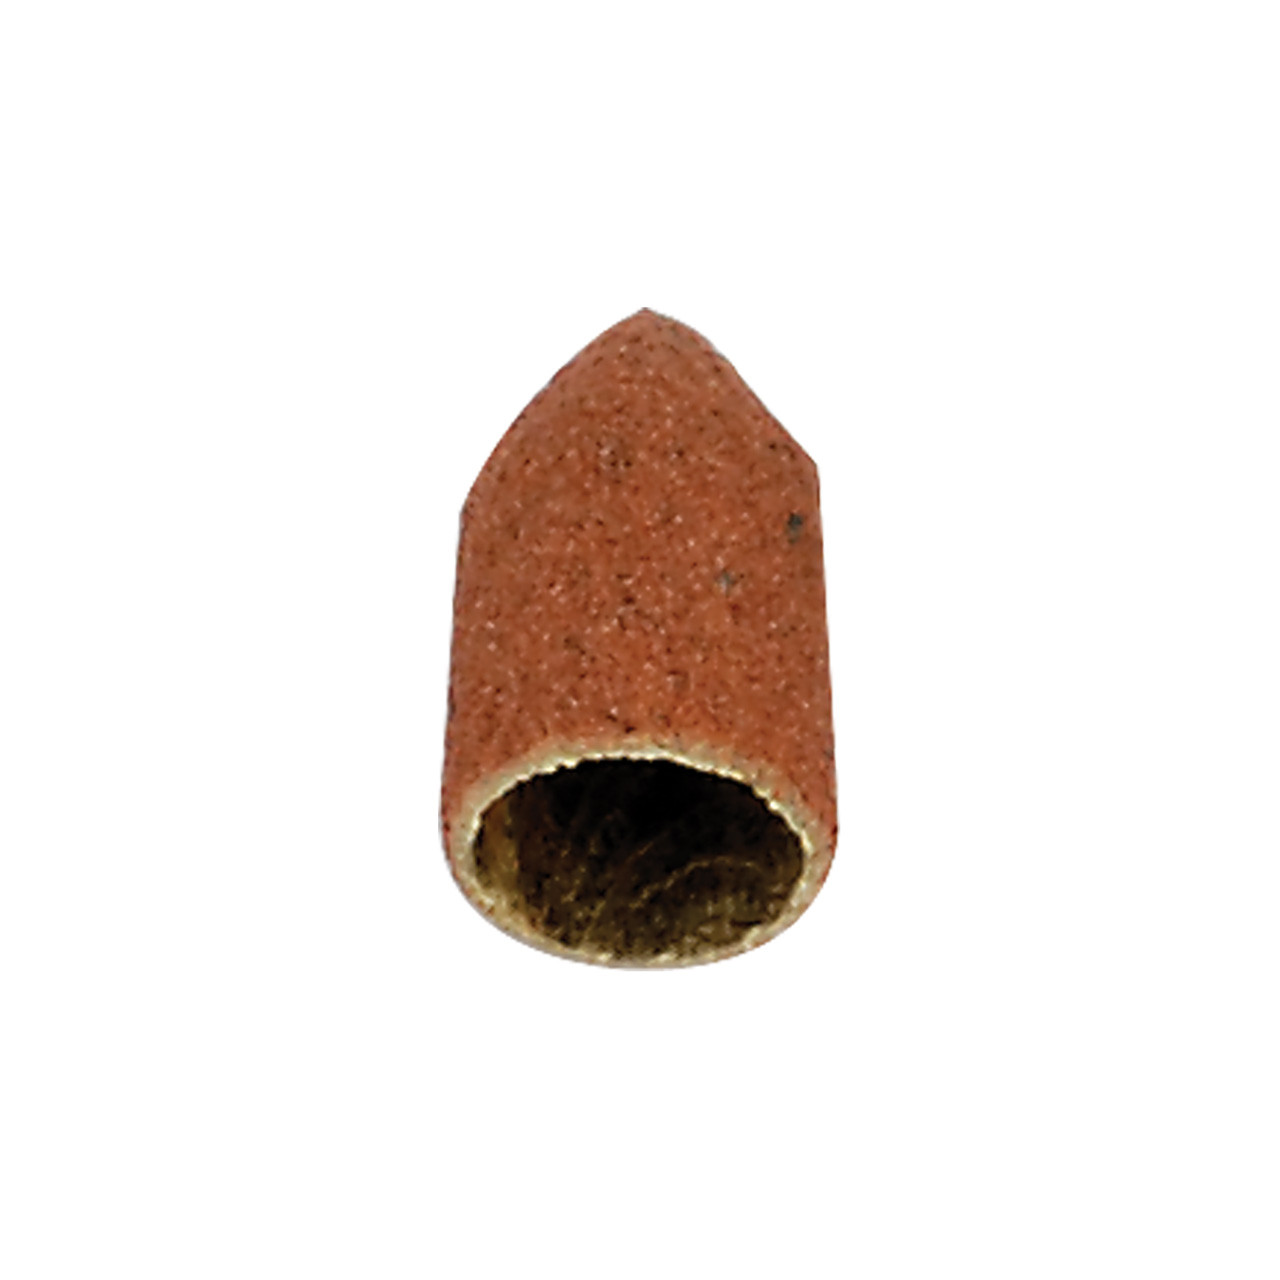 Abrasive Caps - Cone Top 1/2" x 11/16", 150 Grit (Pkg. of 50)